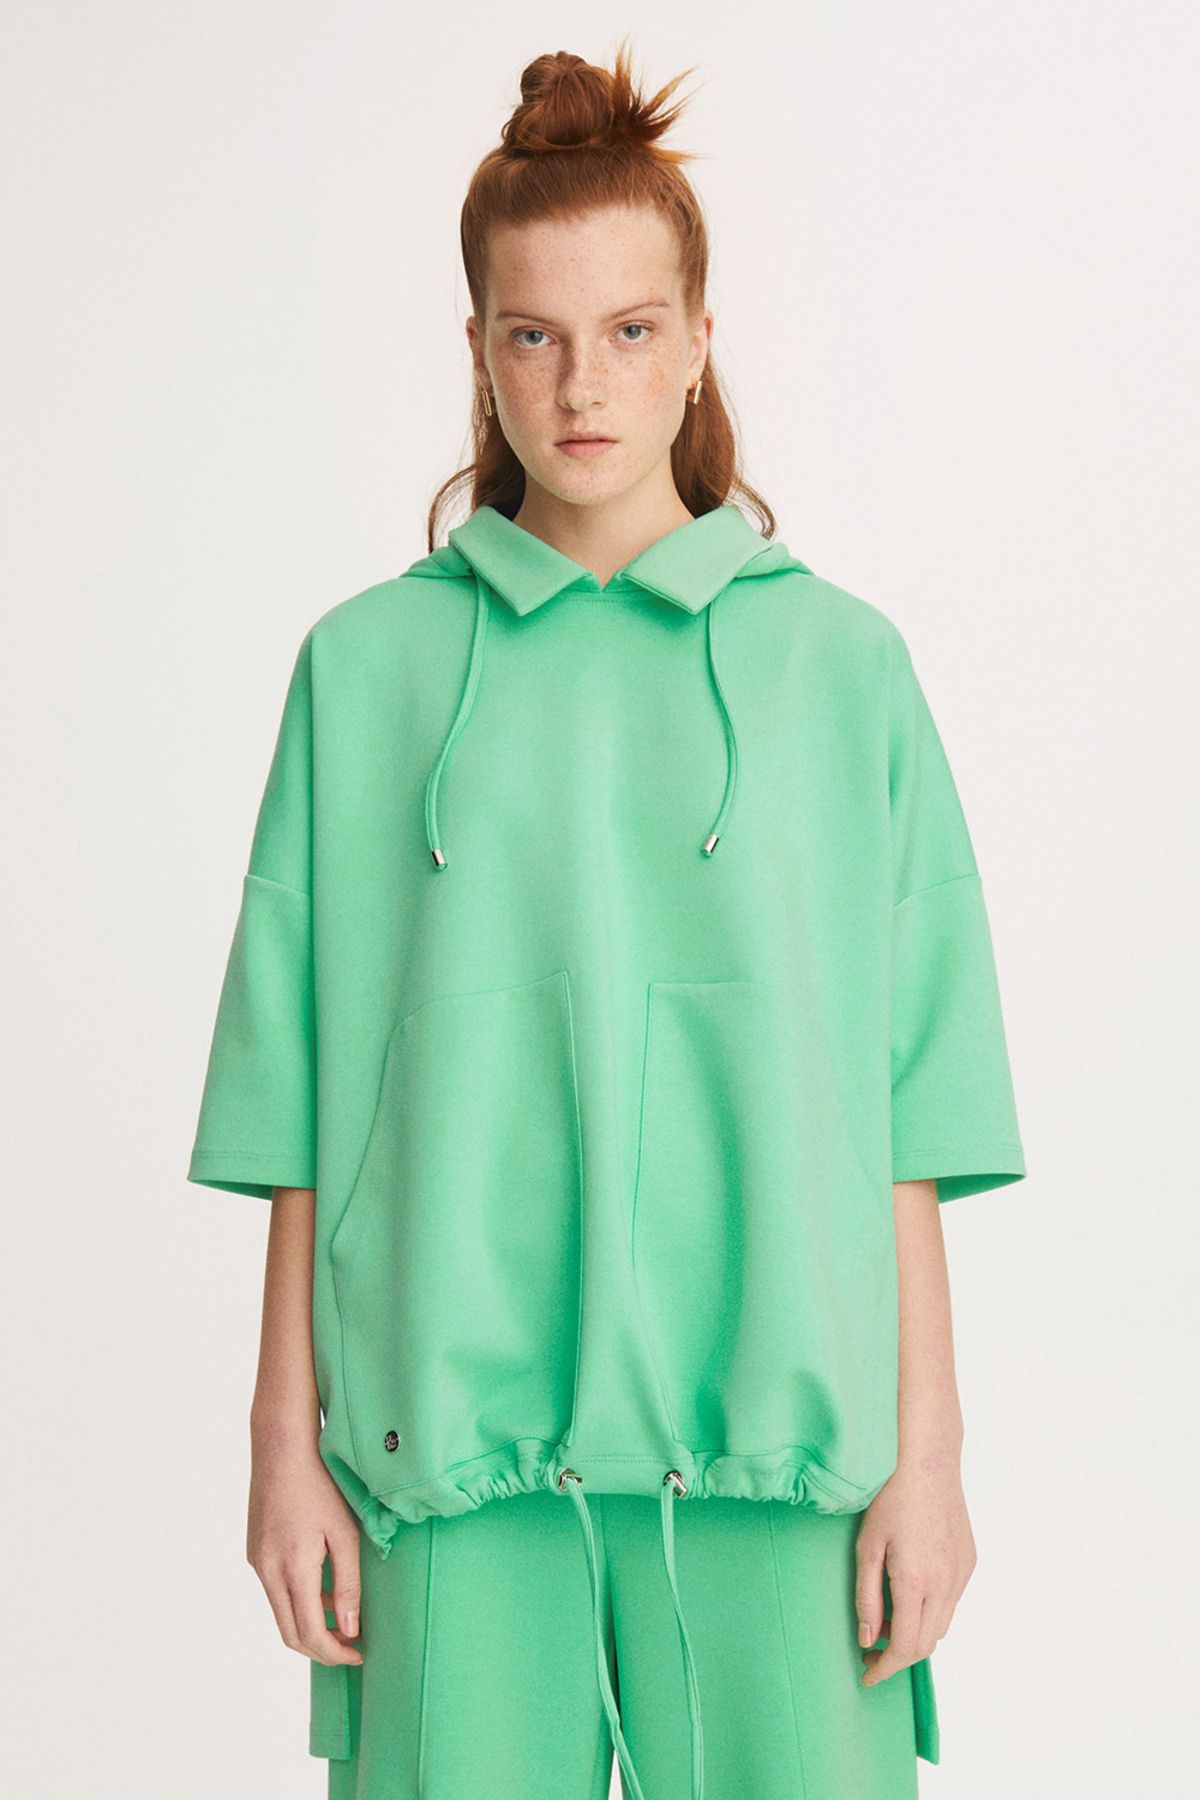 Perspective Ellie Neon Yeşili Renk Sweatshirt